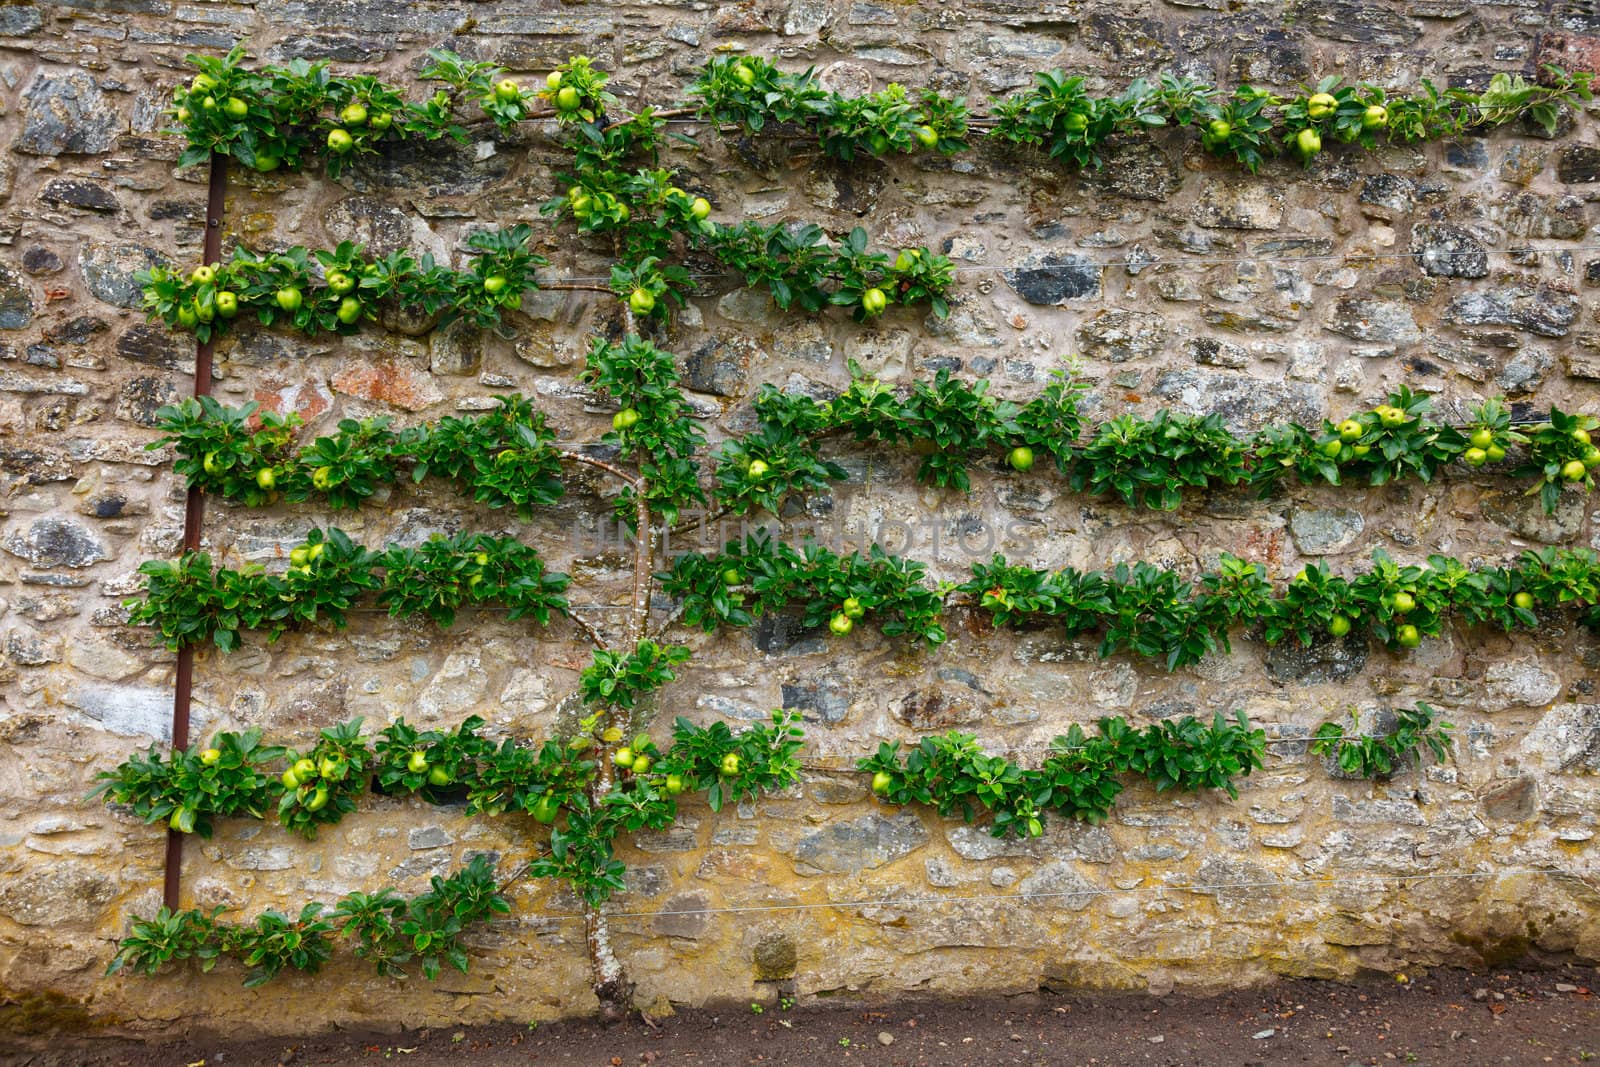 Horizontal espalier fruit tree trained on stone wall